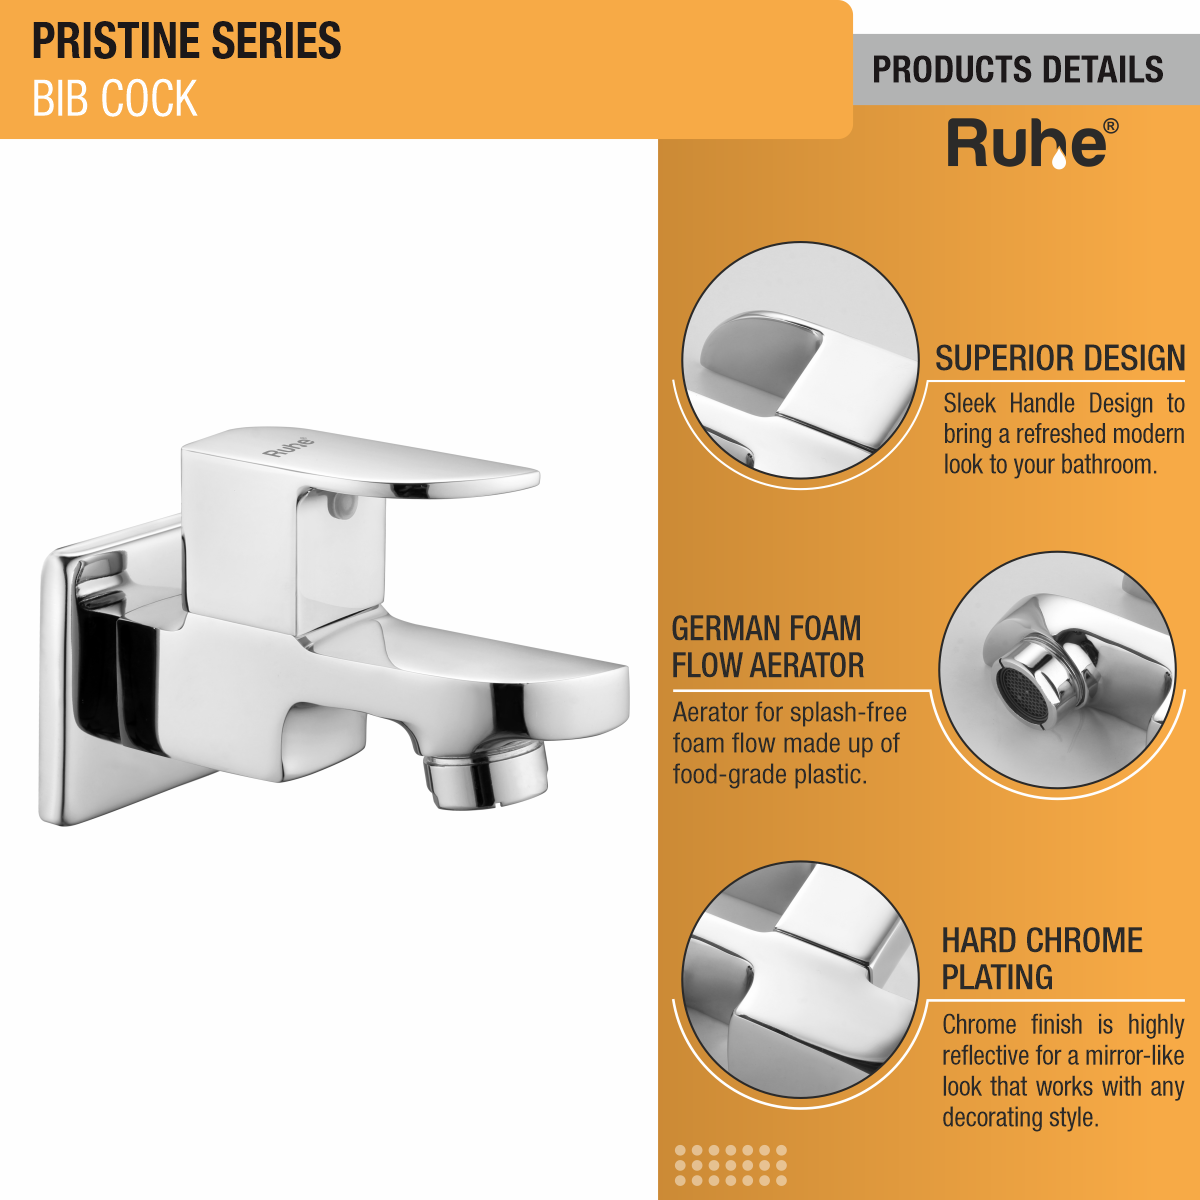 Pristine Bib Tap Brass Faucet product details